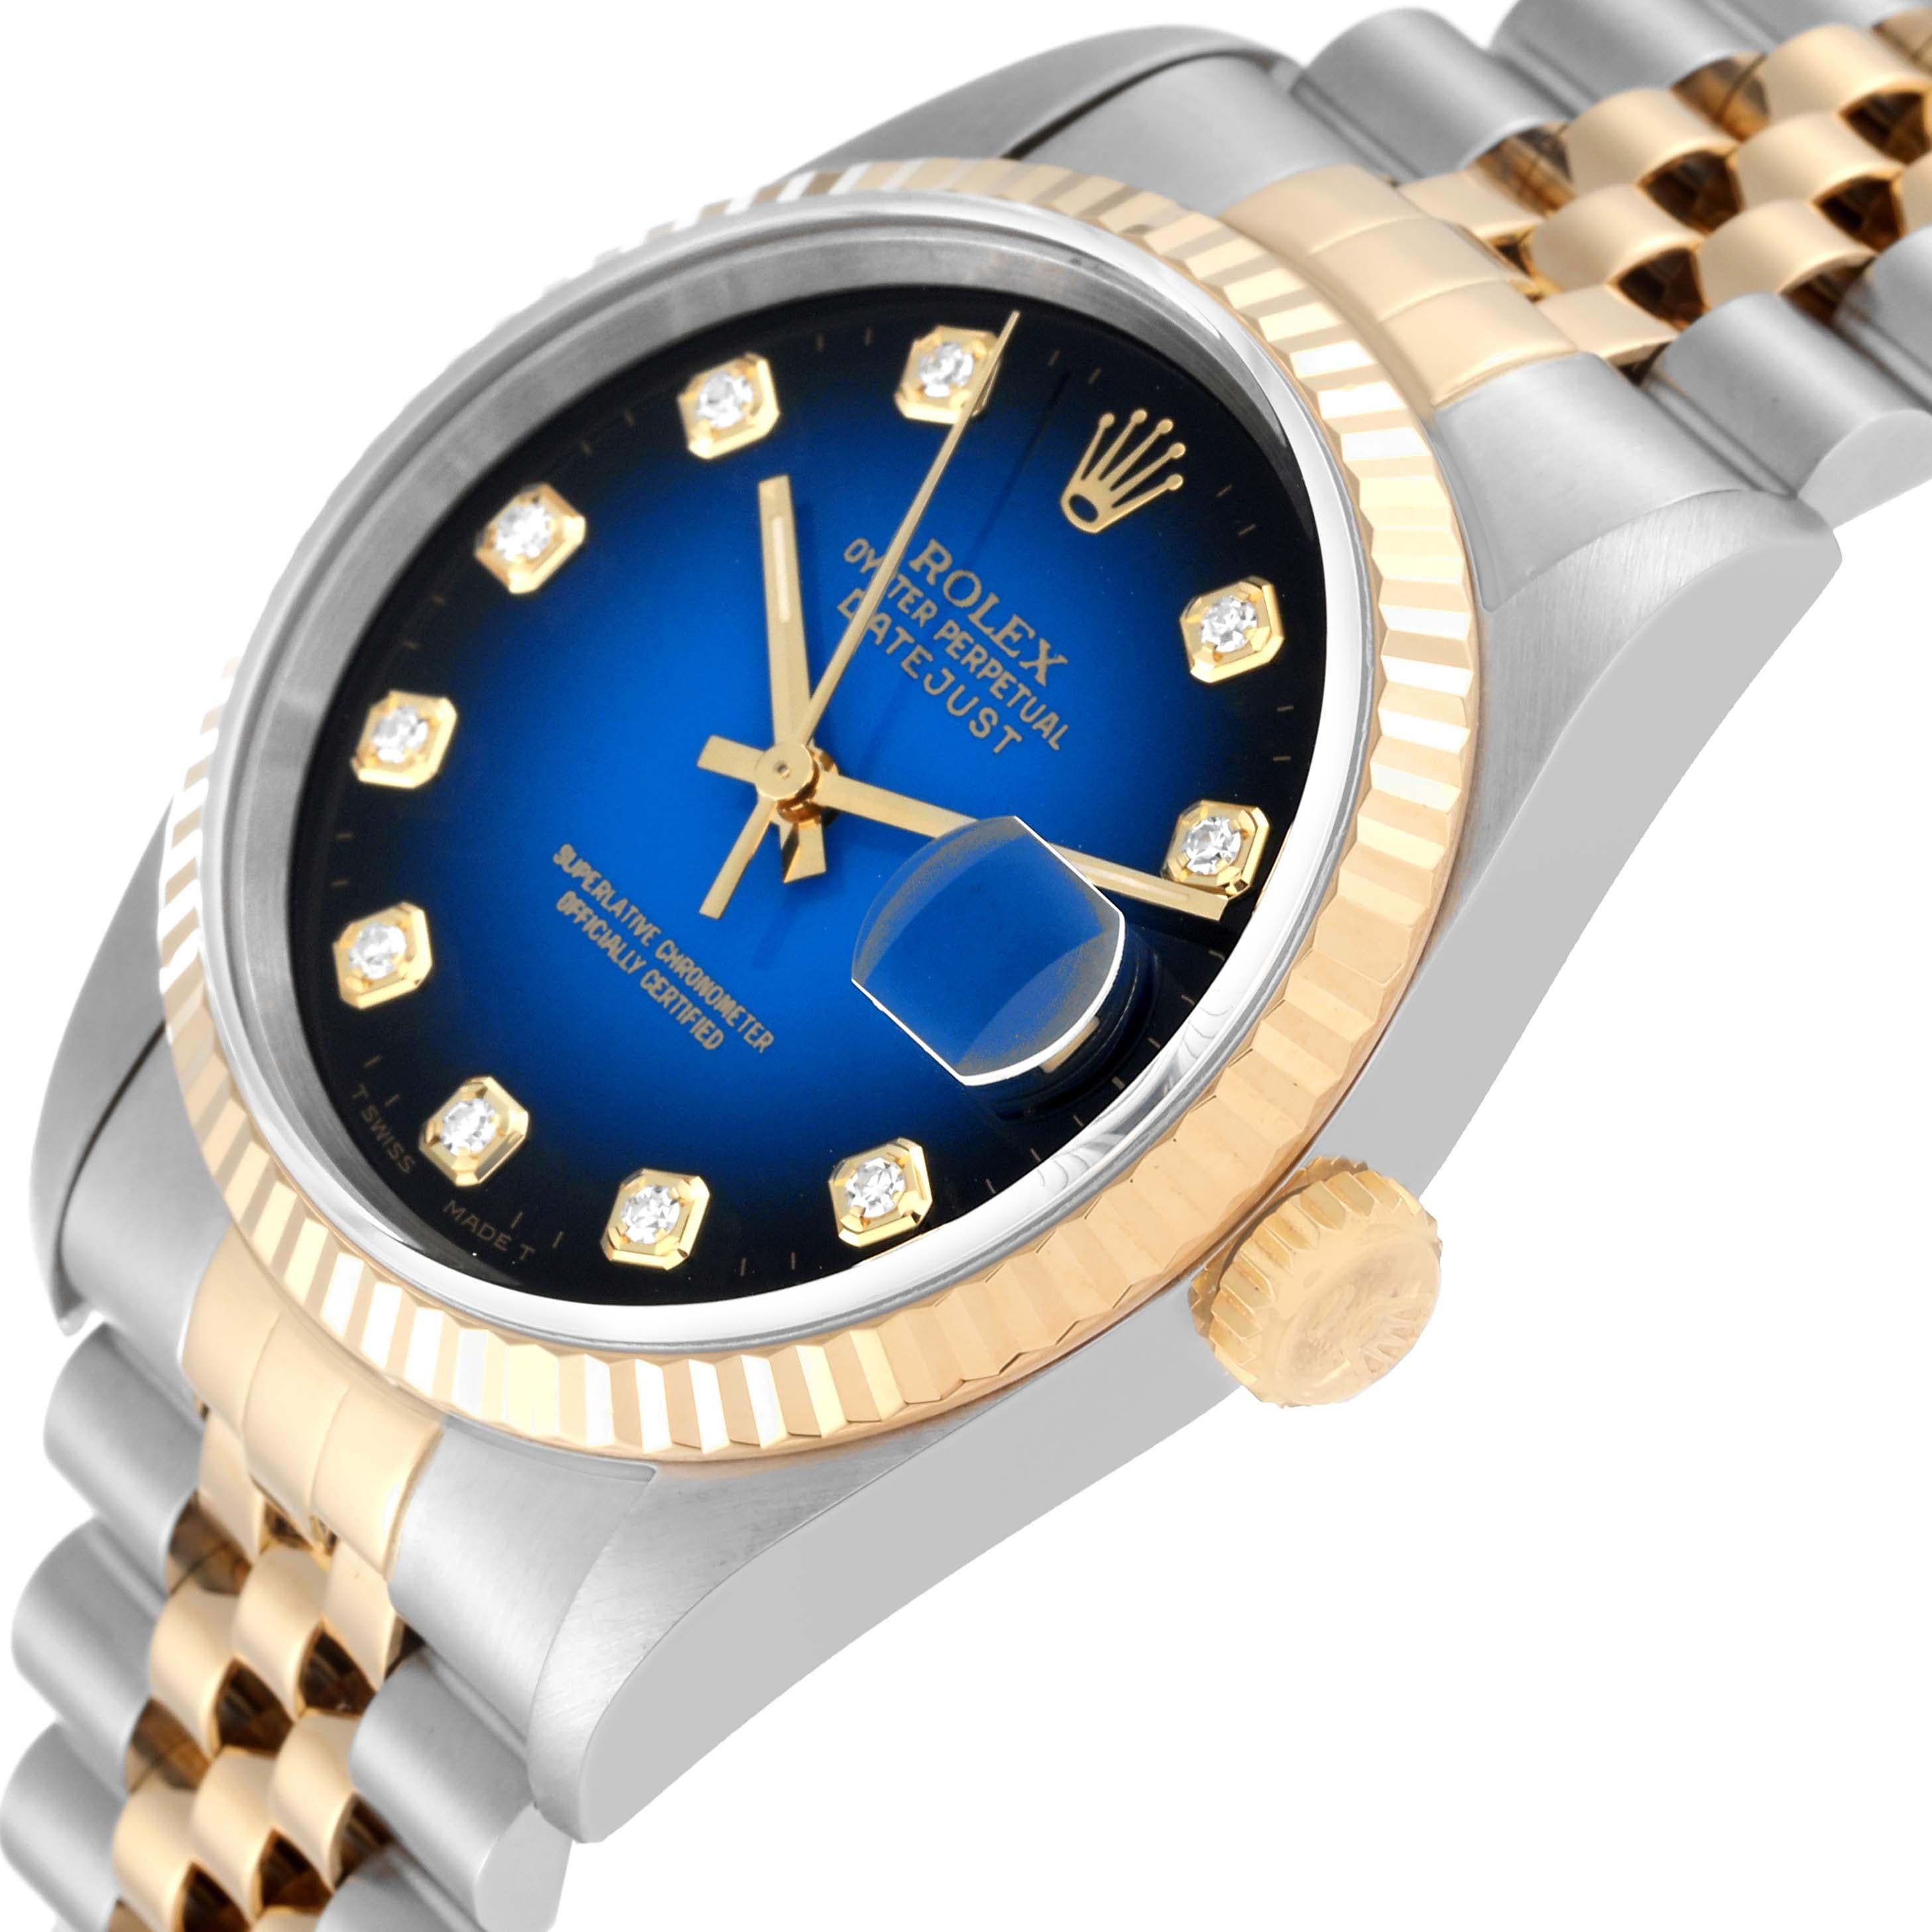 Men's Rolex Datejust Vignette Diamond Dial Steel Yellow Gold Watch 16233 Box Papers